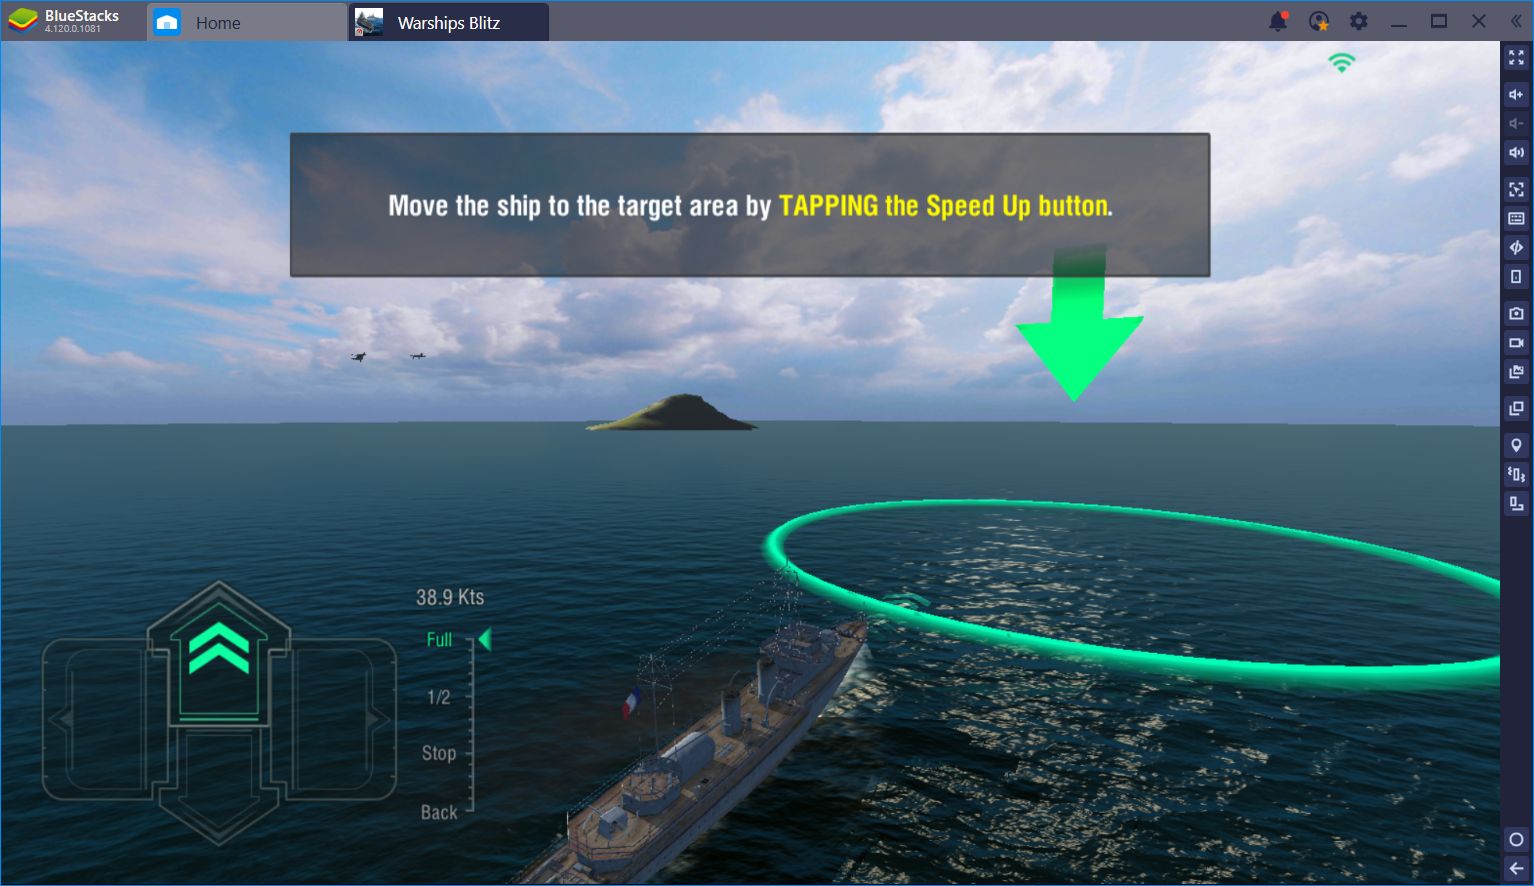 World of Warships Blitz on BlueStacks: The Best Navy Game?